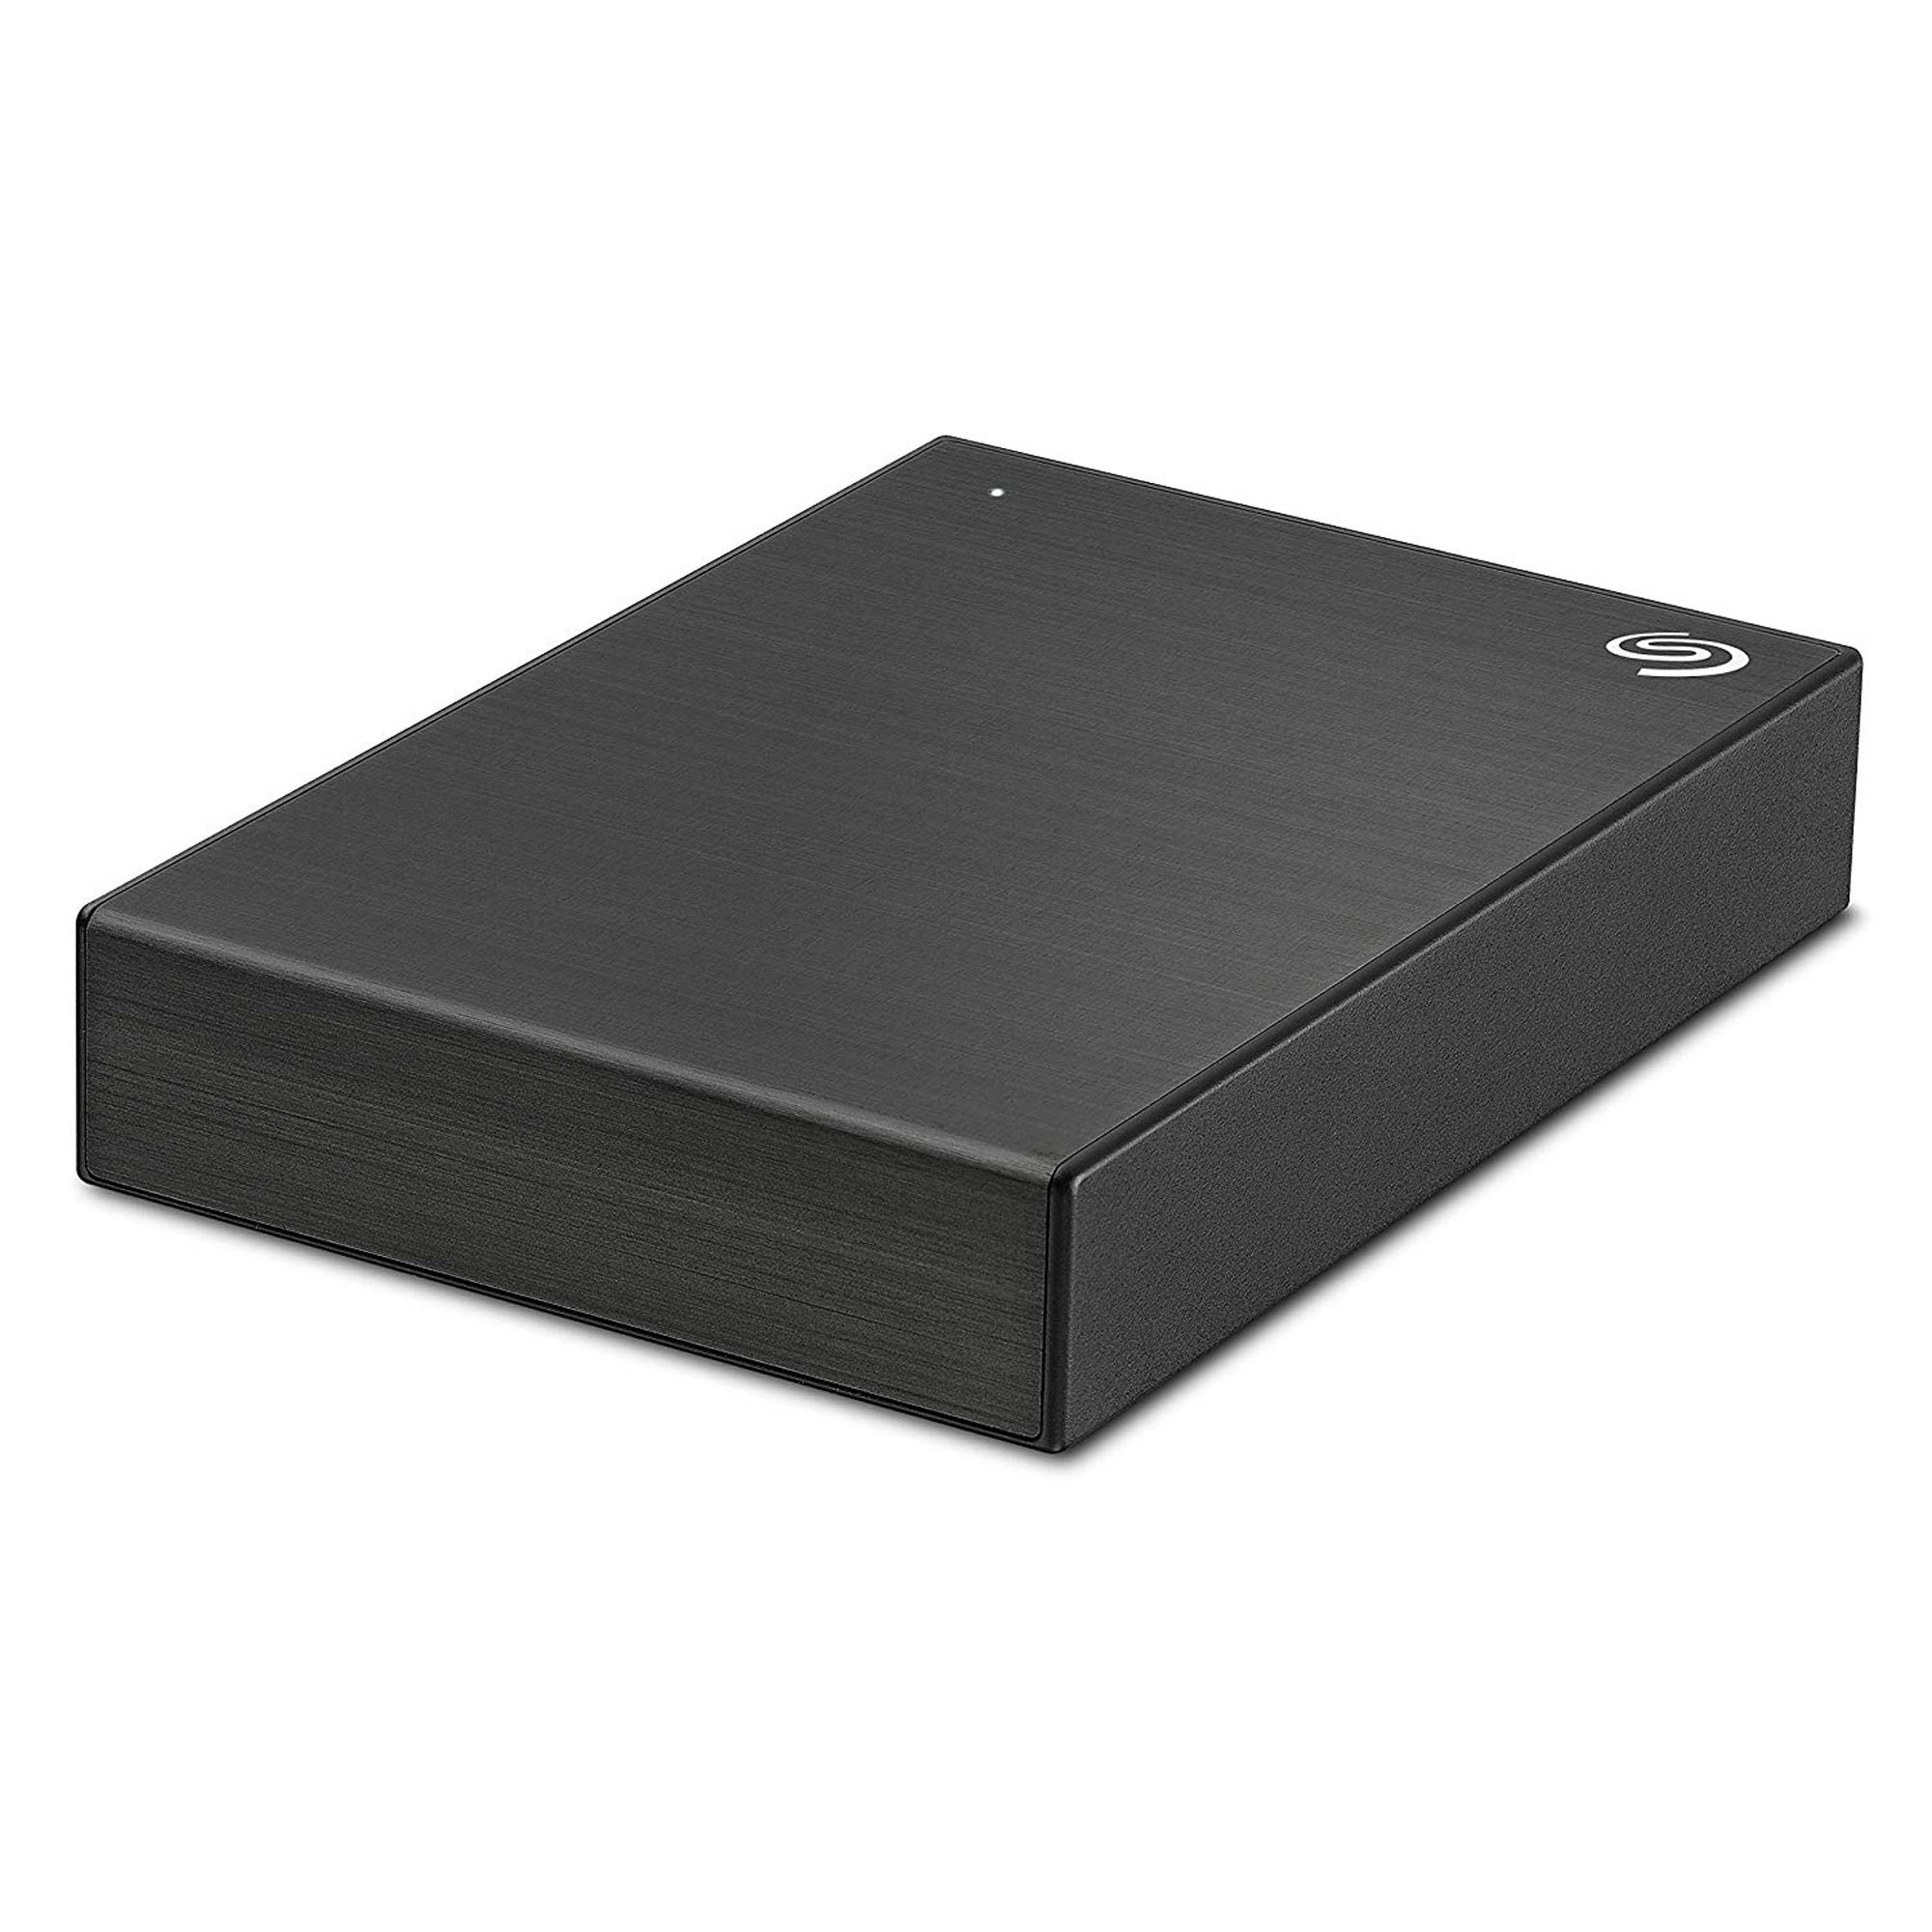 Seagate Backup Plus Portable 4TB External USB 3.0 Hard Drive - Black - image 4 of 8